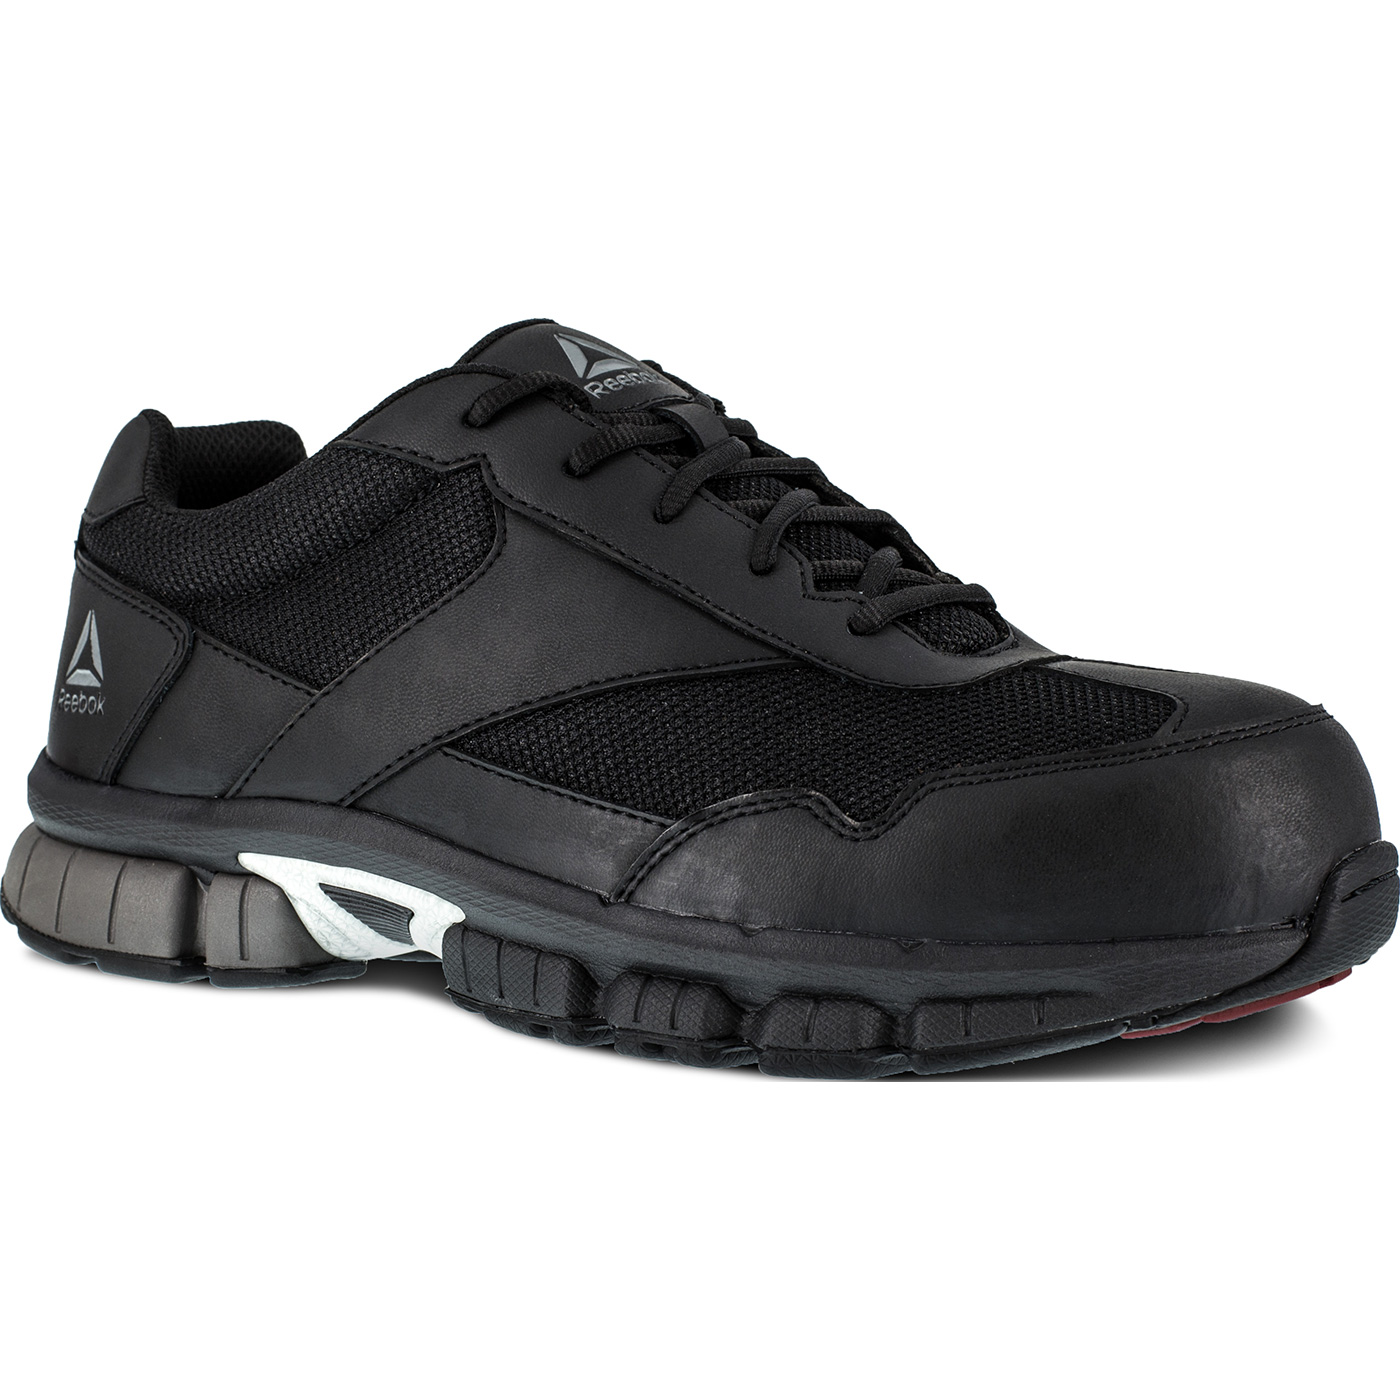 Reebok Ketia Composite Toe Work Athletic Shoe Size 8(W) - image 1 of 5